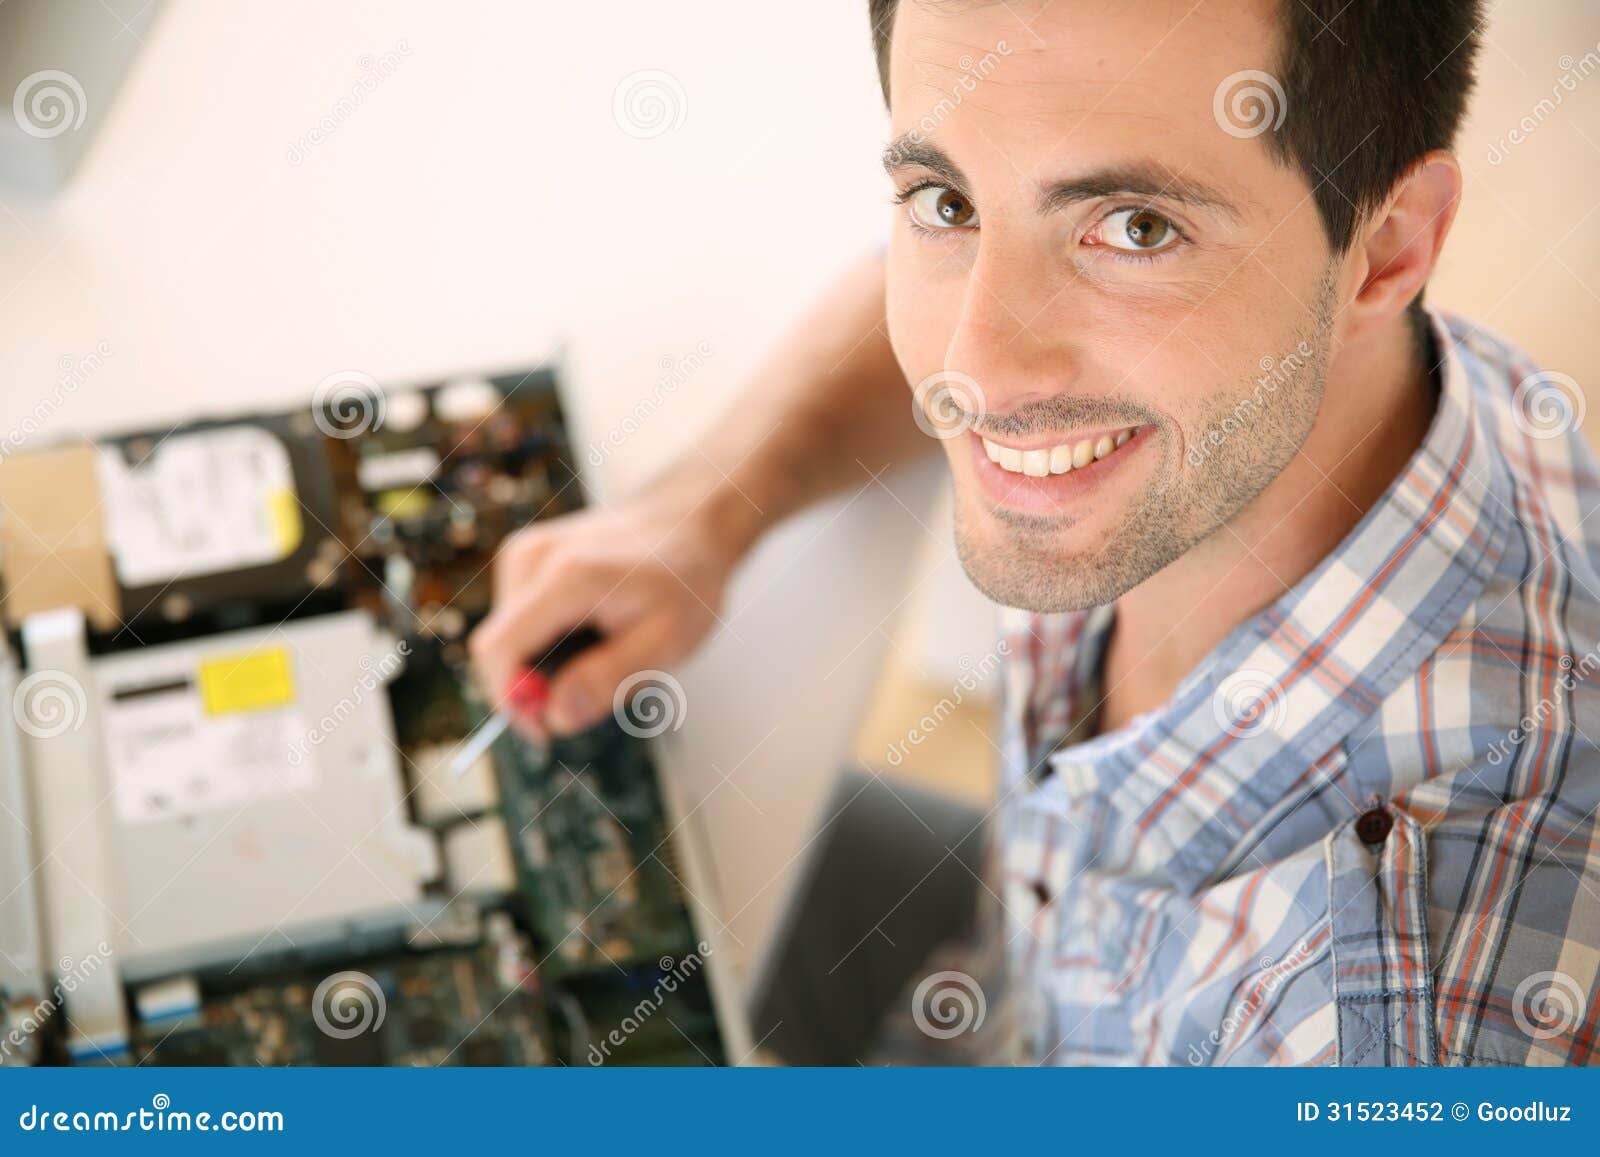 man fixing electronic appliance